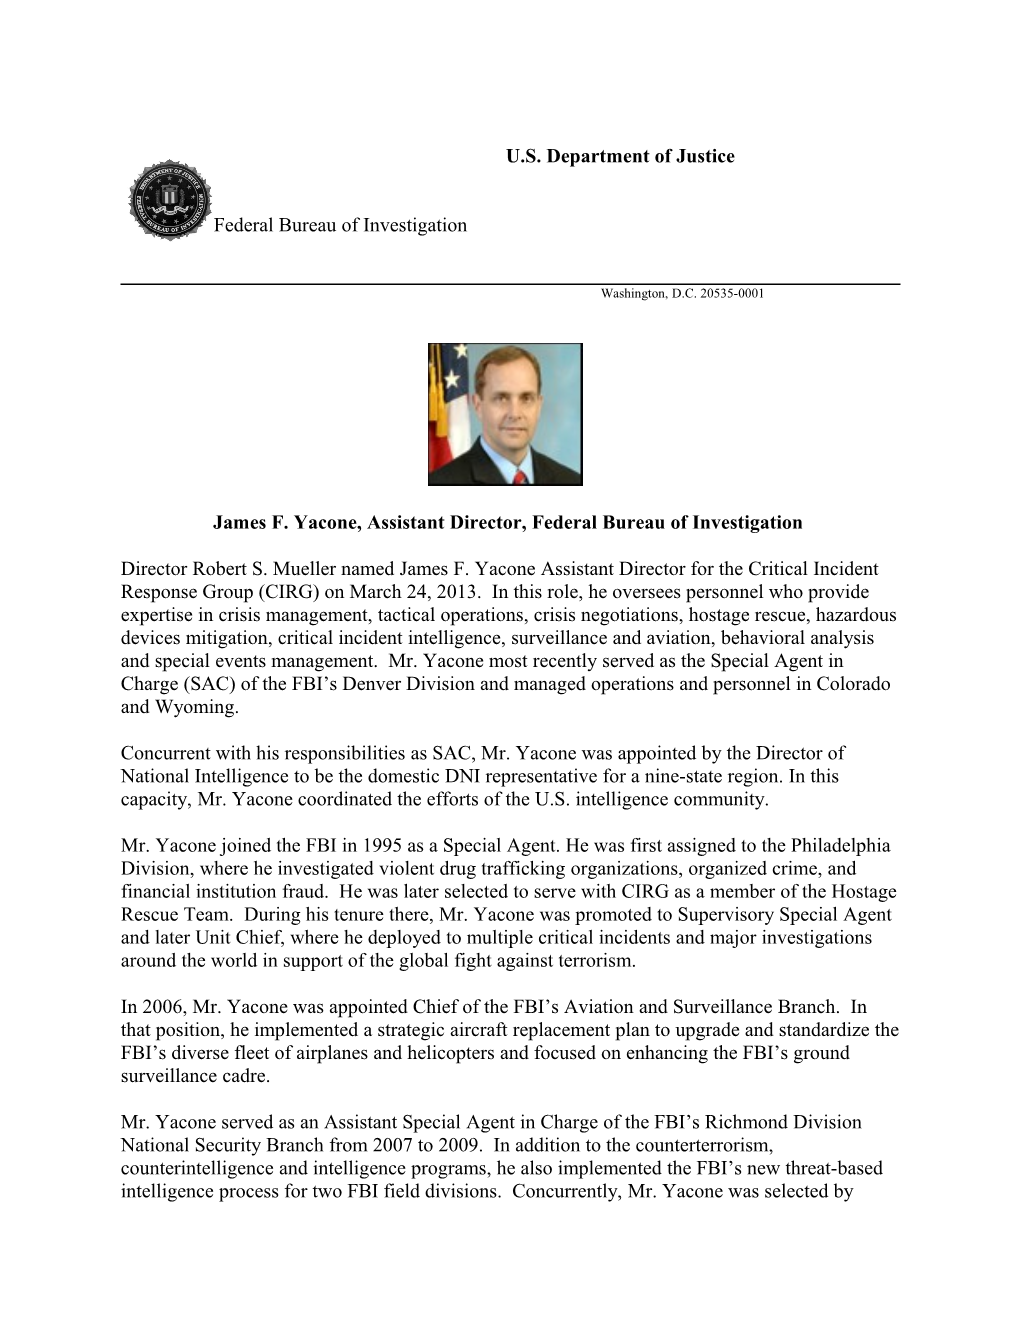 James F. Yacone, Assistant Director, Federal Bureau of Investigation